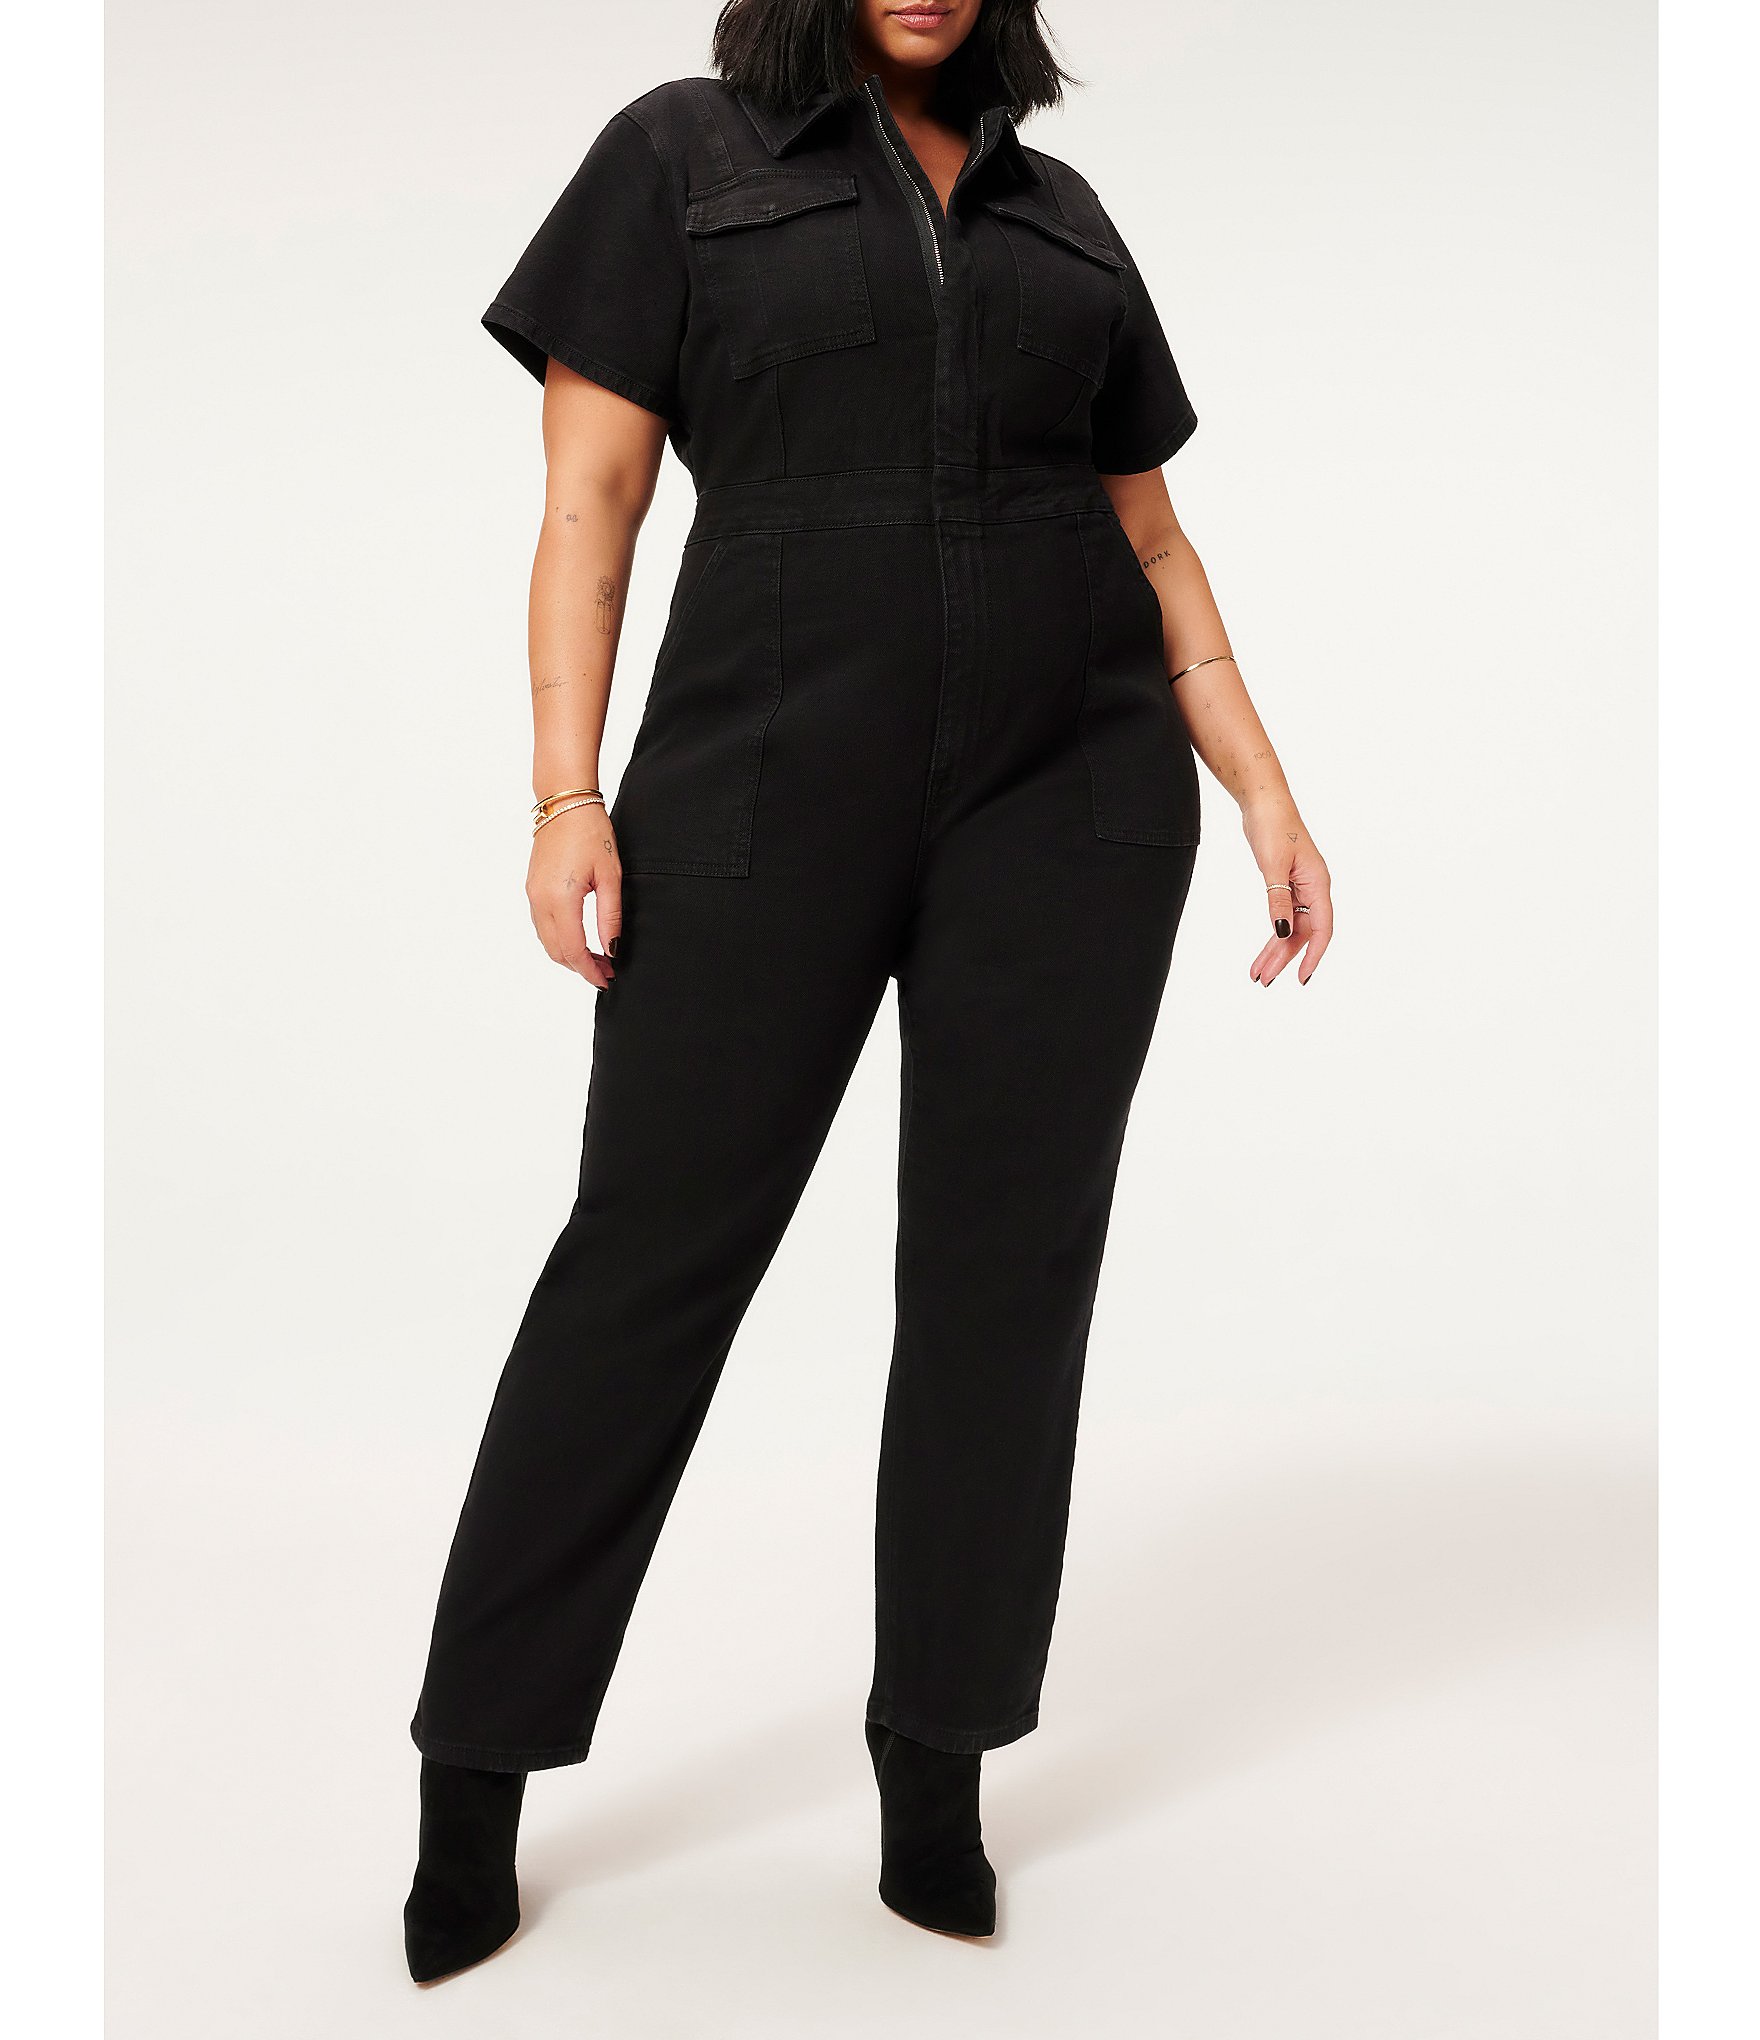 Ombhsd Loose Plus Size Denim Jumpsuit Women Casual Streetwear Wide Leg  Jeans Overalls Oversized Baggy Rompers Ladies Pants (Color : Black-2, Size  : X-large) : Amazon.co.uk: Fashion